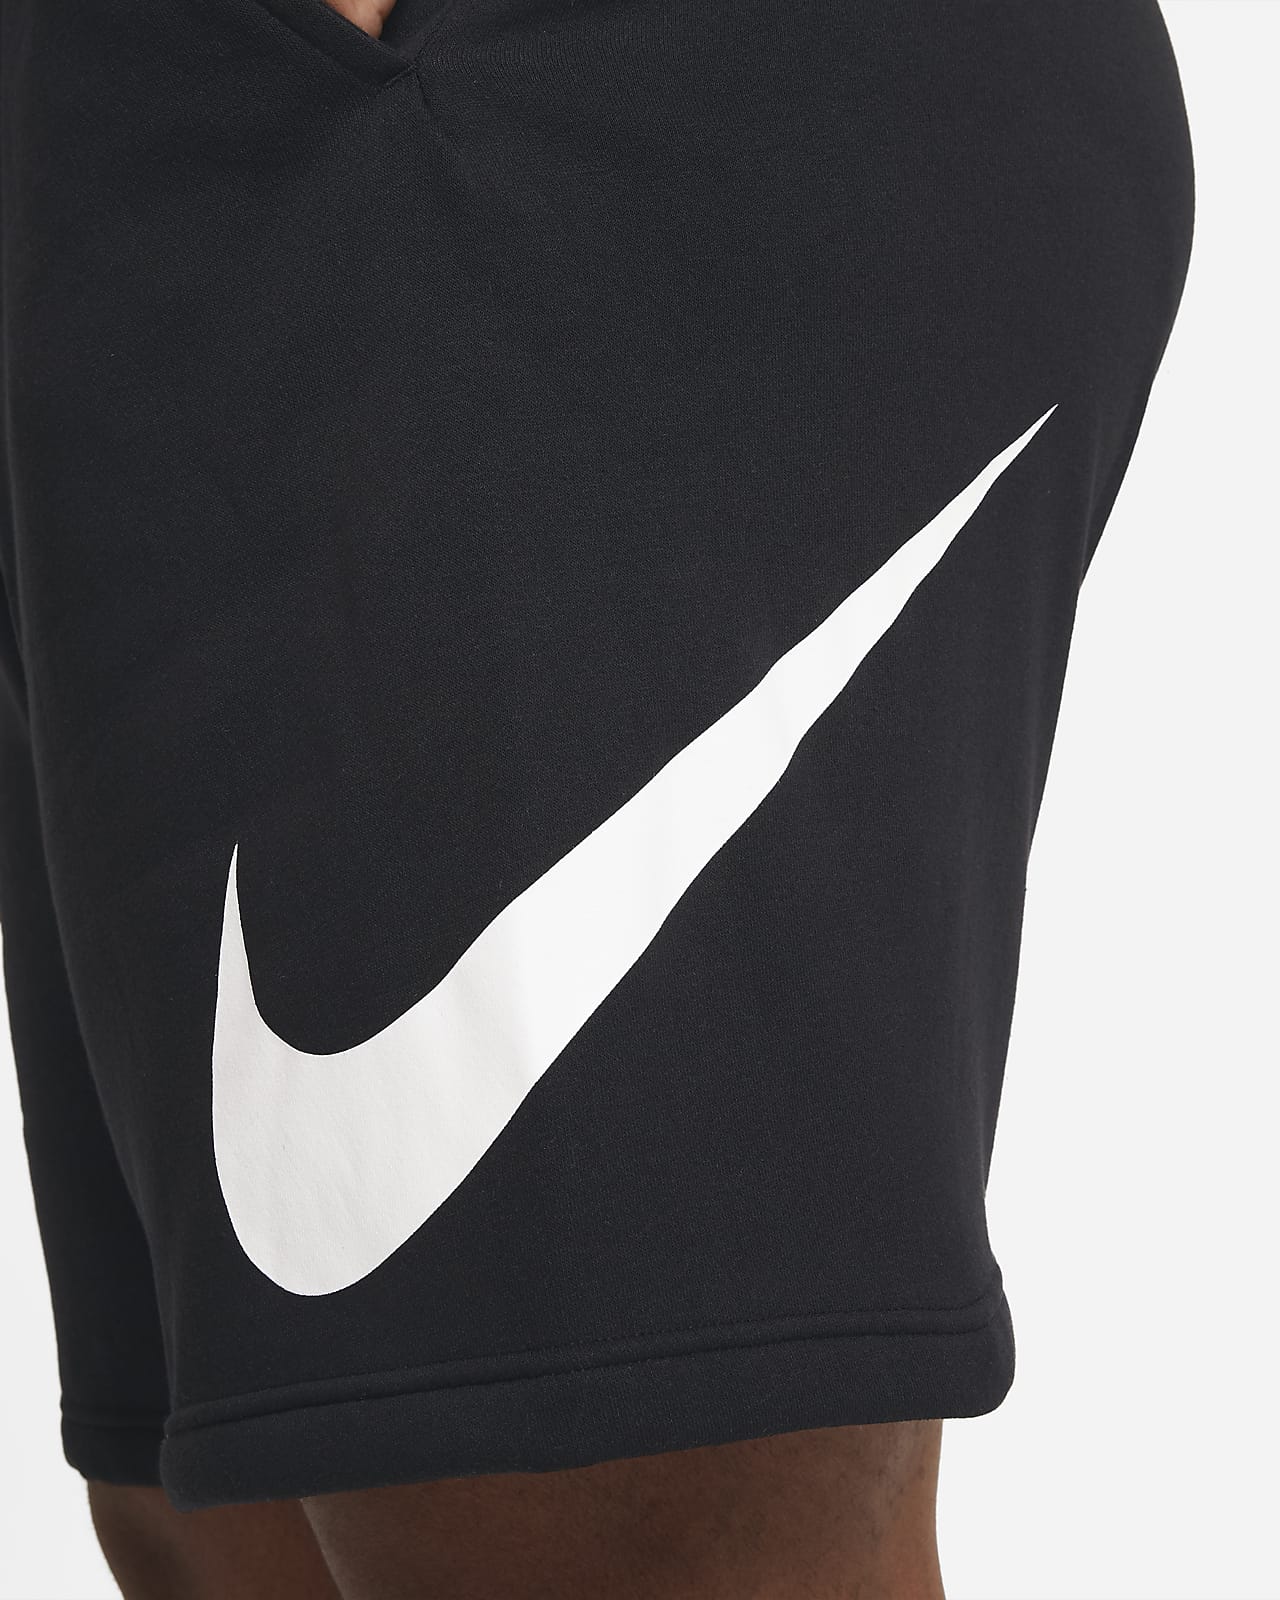 Men\'s Nike Graphic Shorts. Sportswear Club